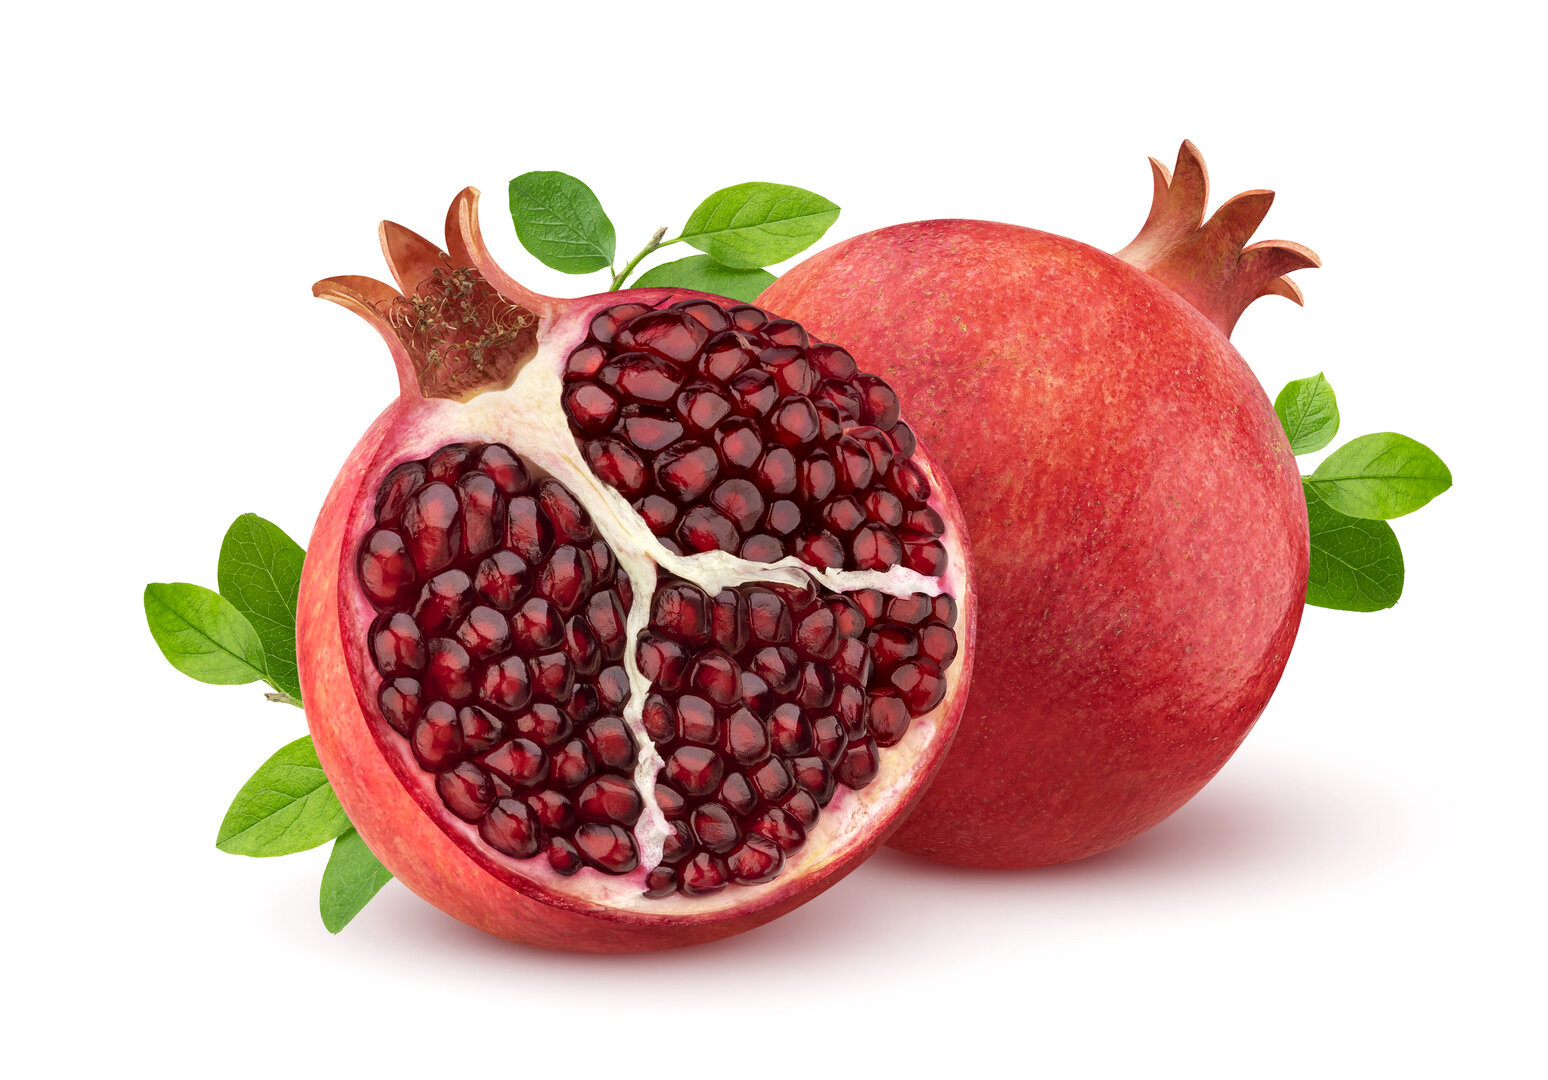 Pomegranate 1 kg